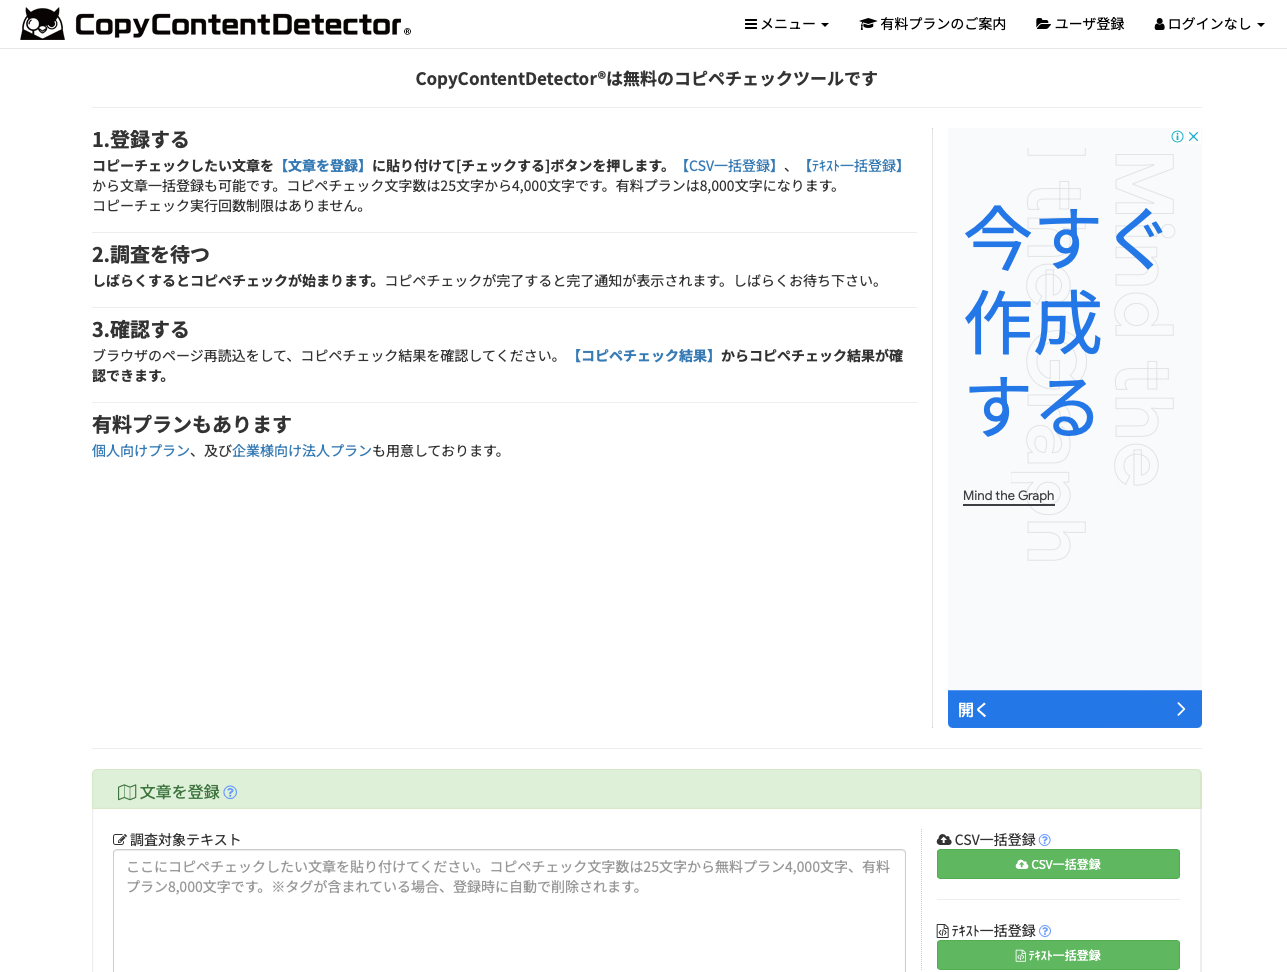 CopyContentDetector（CCD)のトップ画面